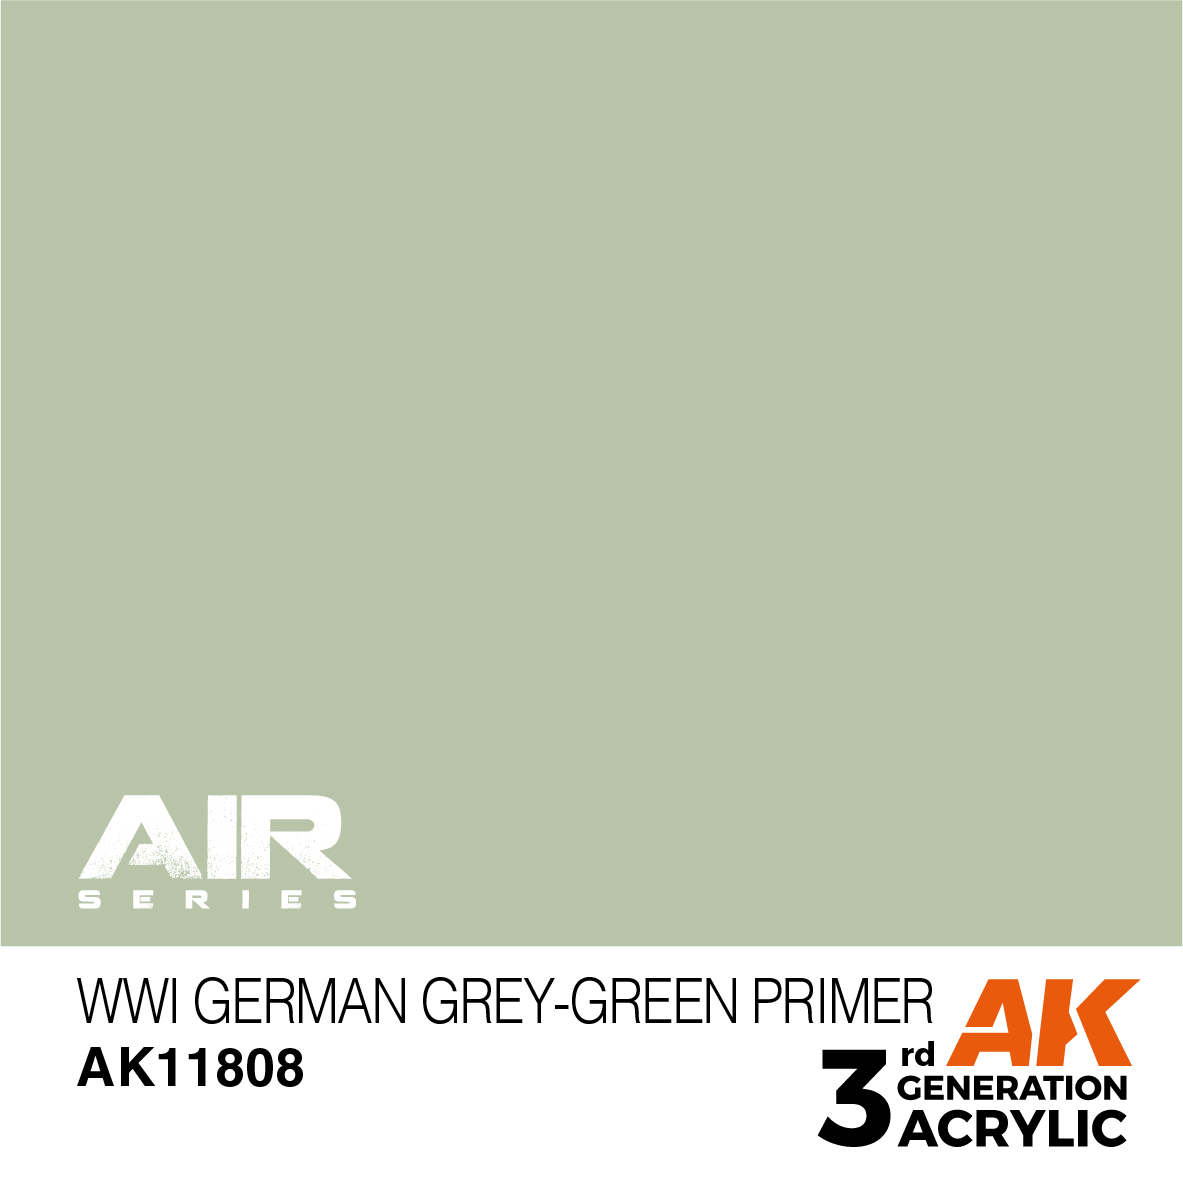 WWI German Grey-Green Primer – AIR